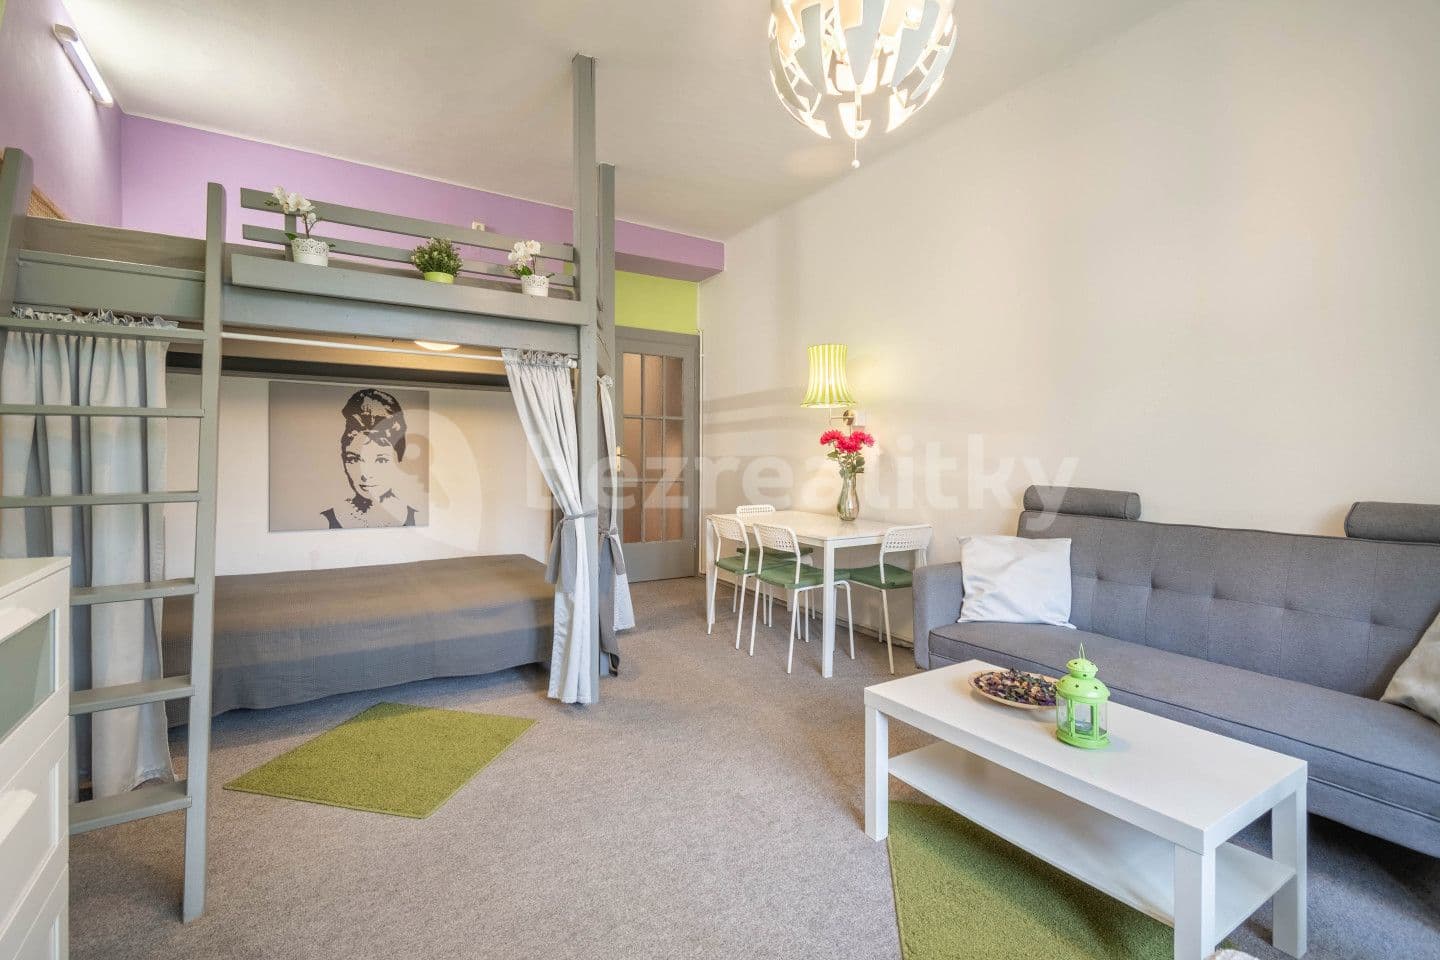 1 bedroom flat for sale, 35 m², Prouzova, Prague, Prague